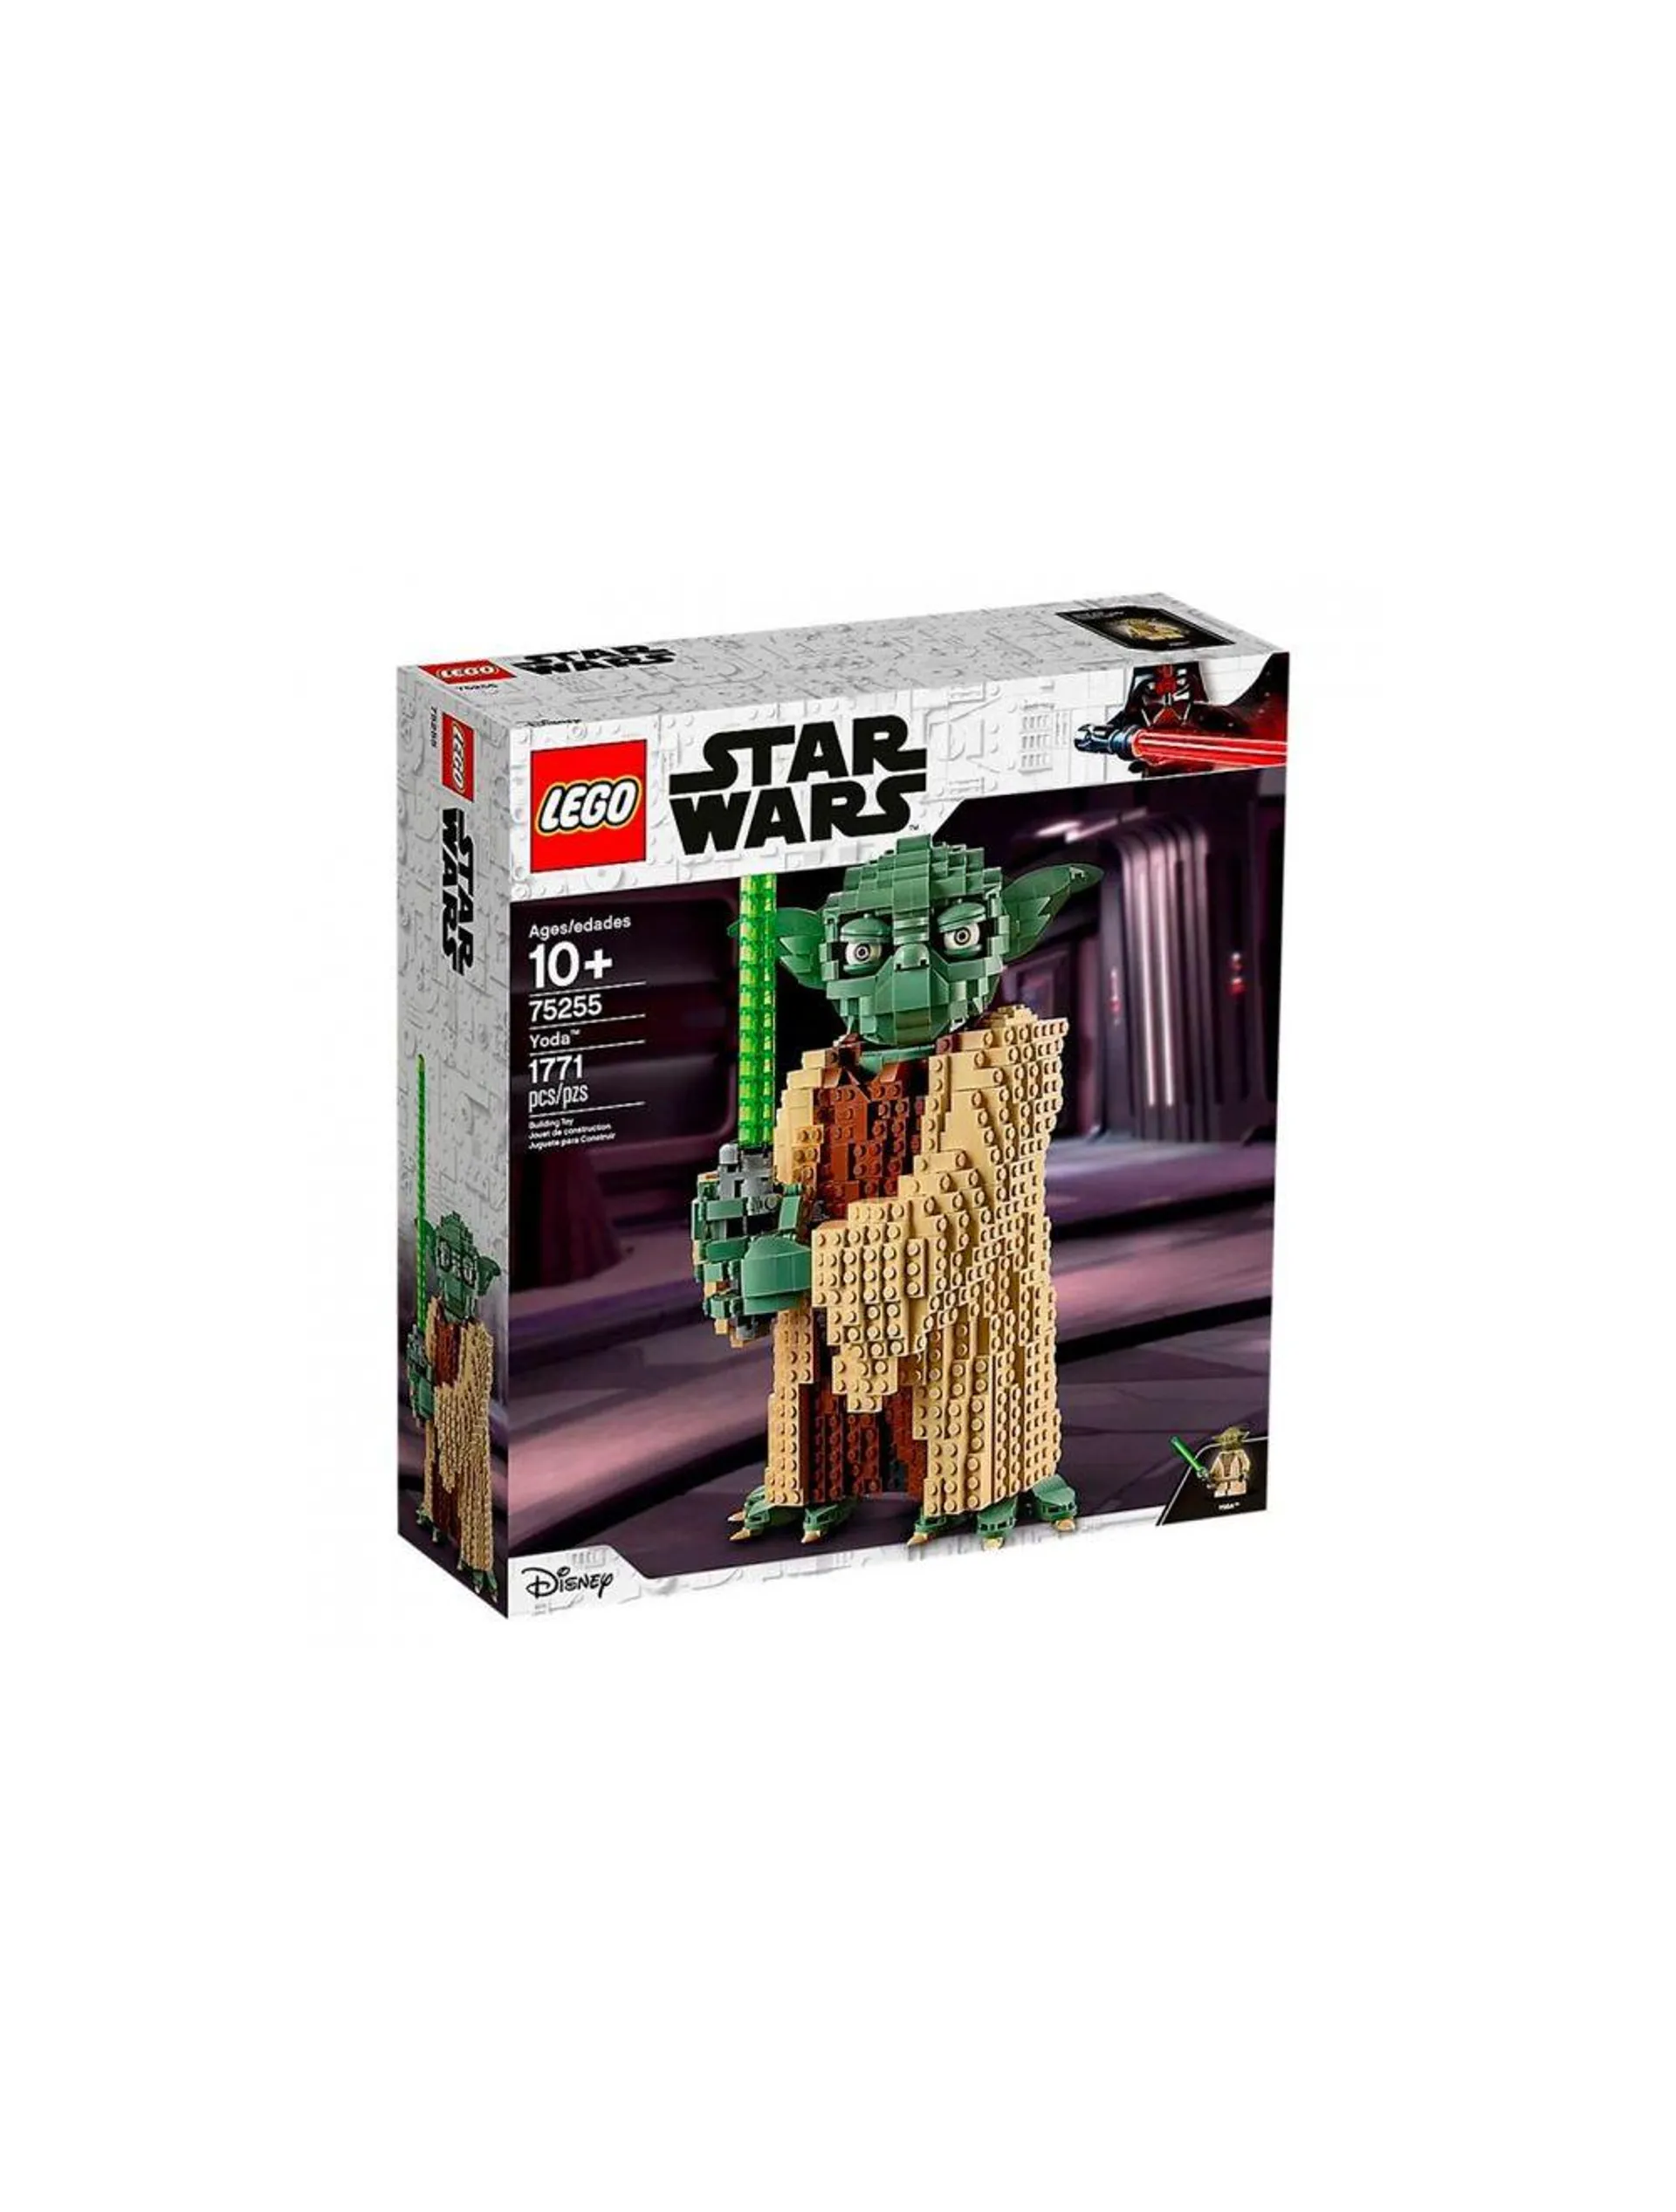 Lego Star Wars - Yoda